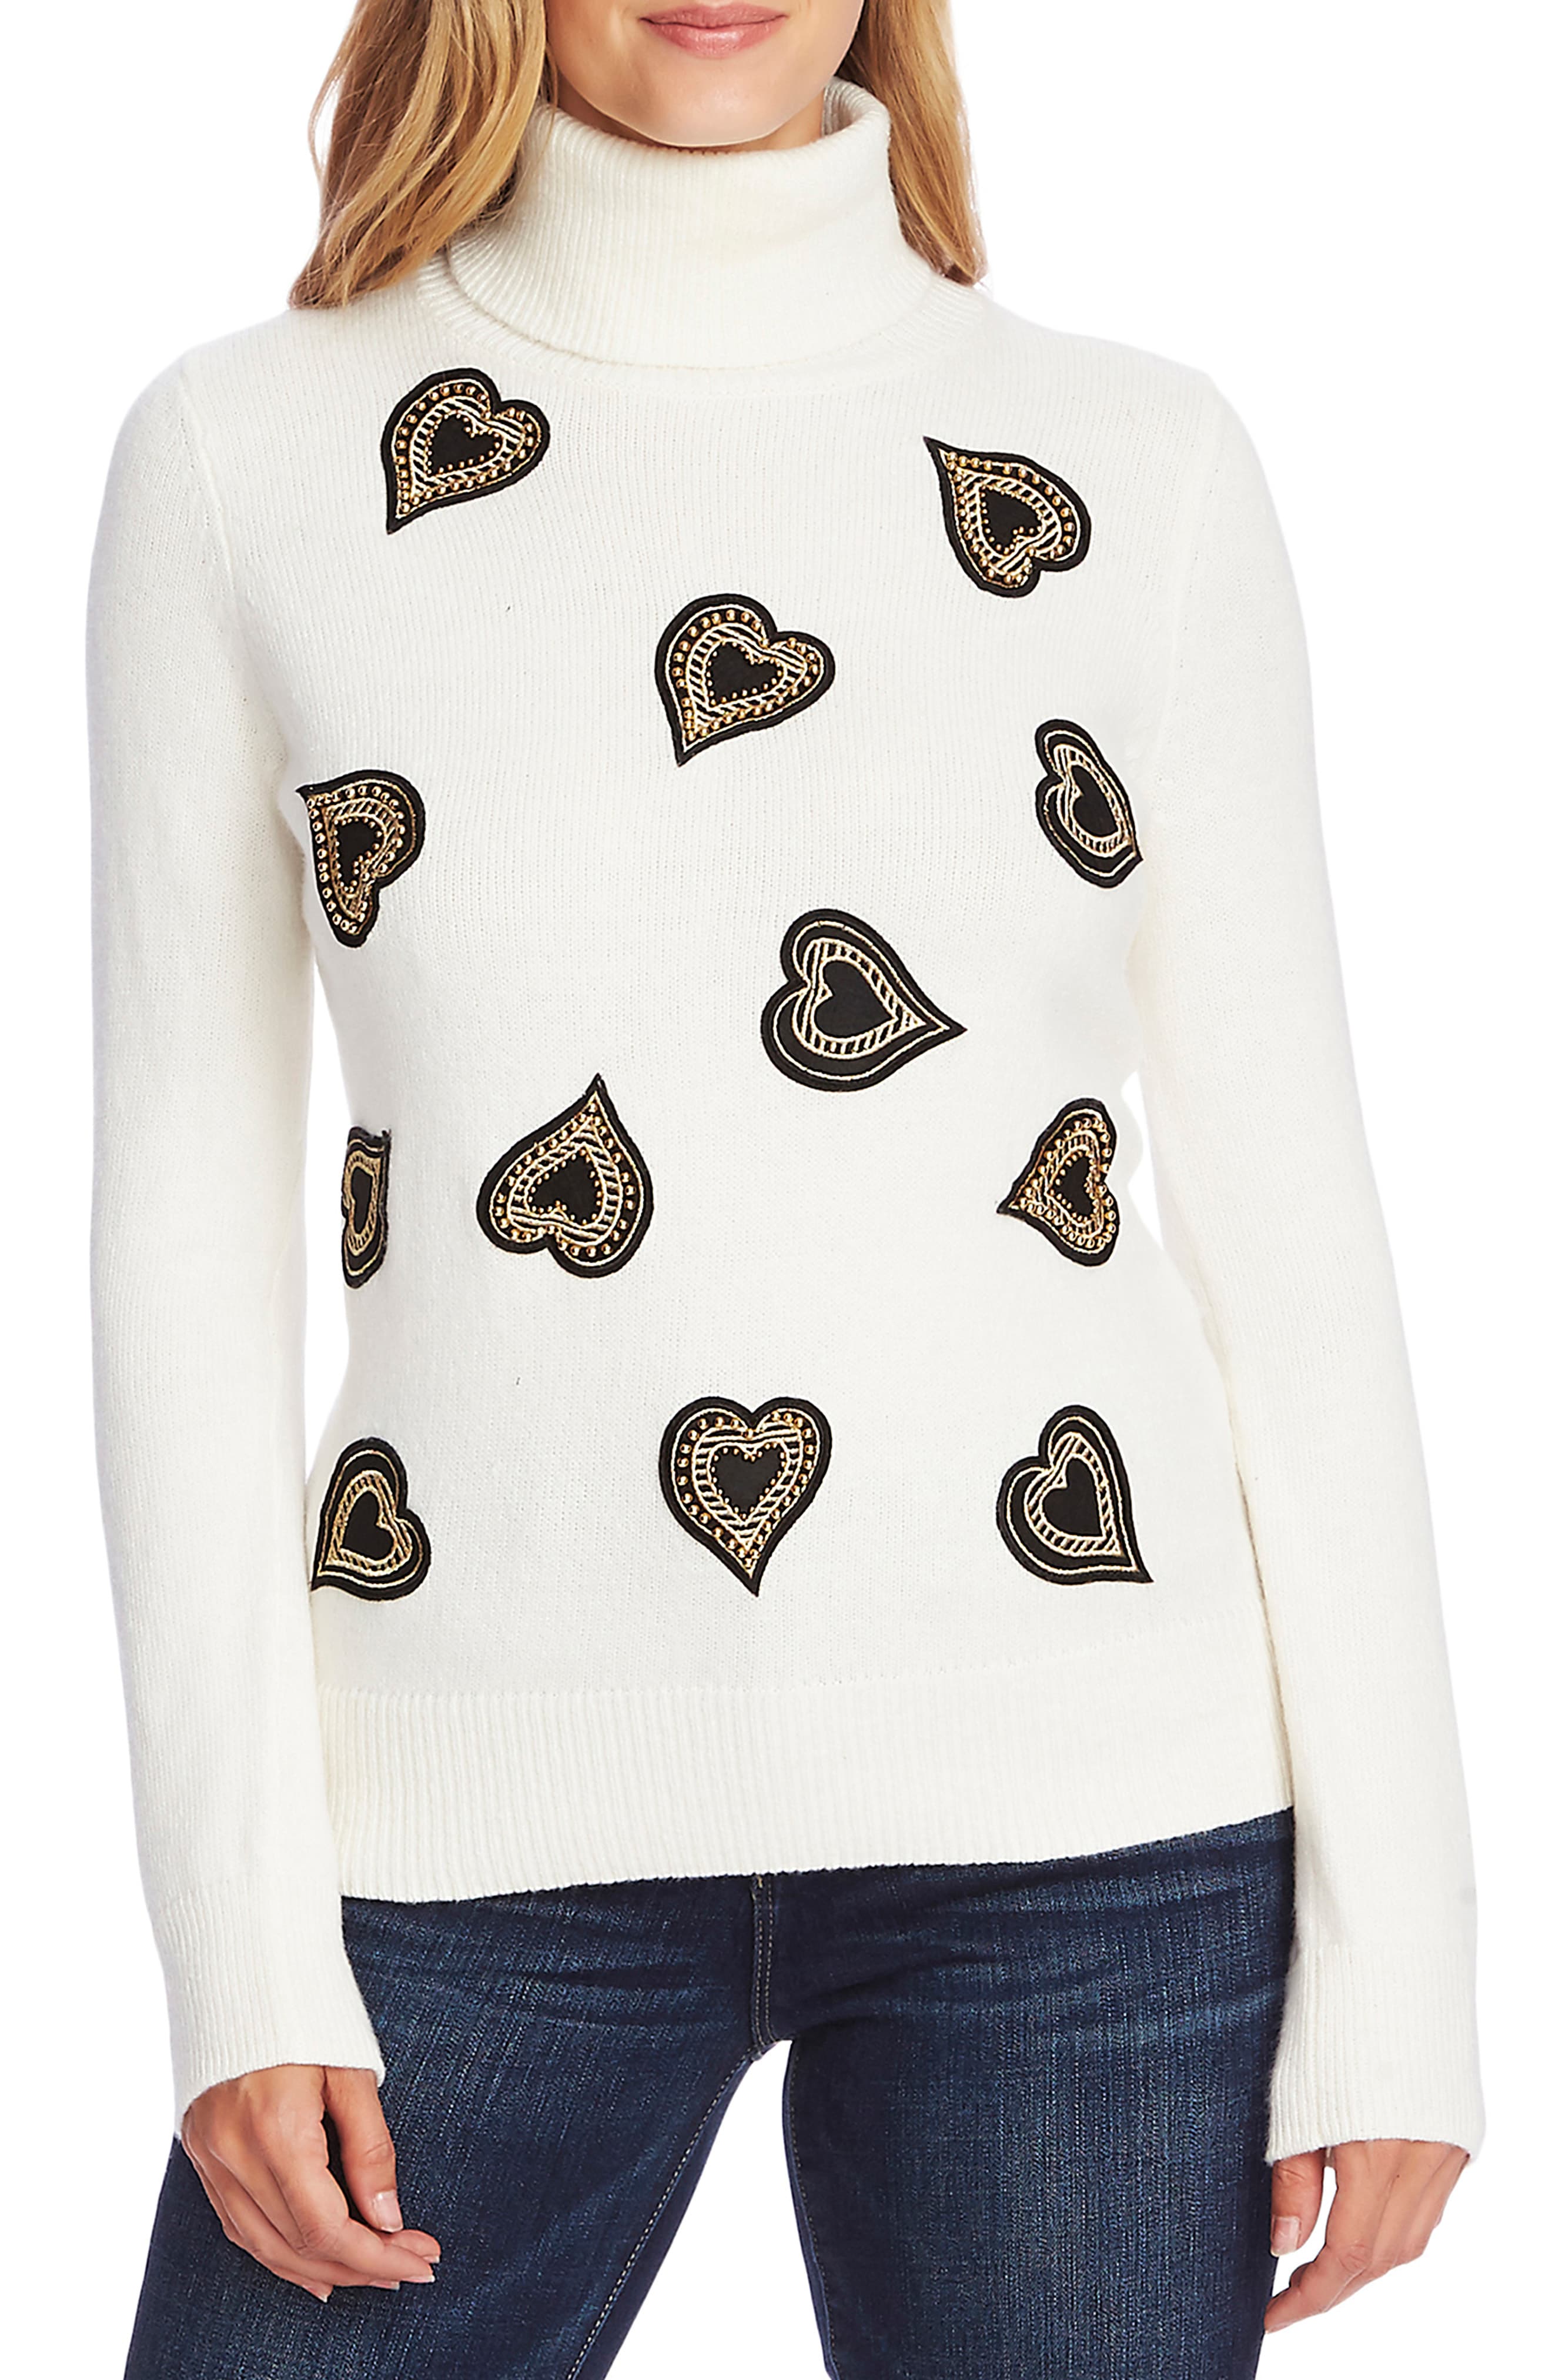 Vince Camuto Women's Embellished Turtleneck Sweater White Size X-Large